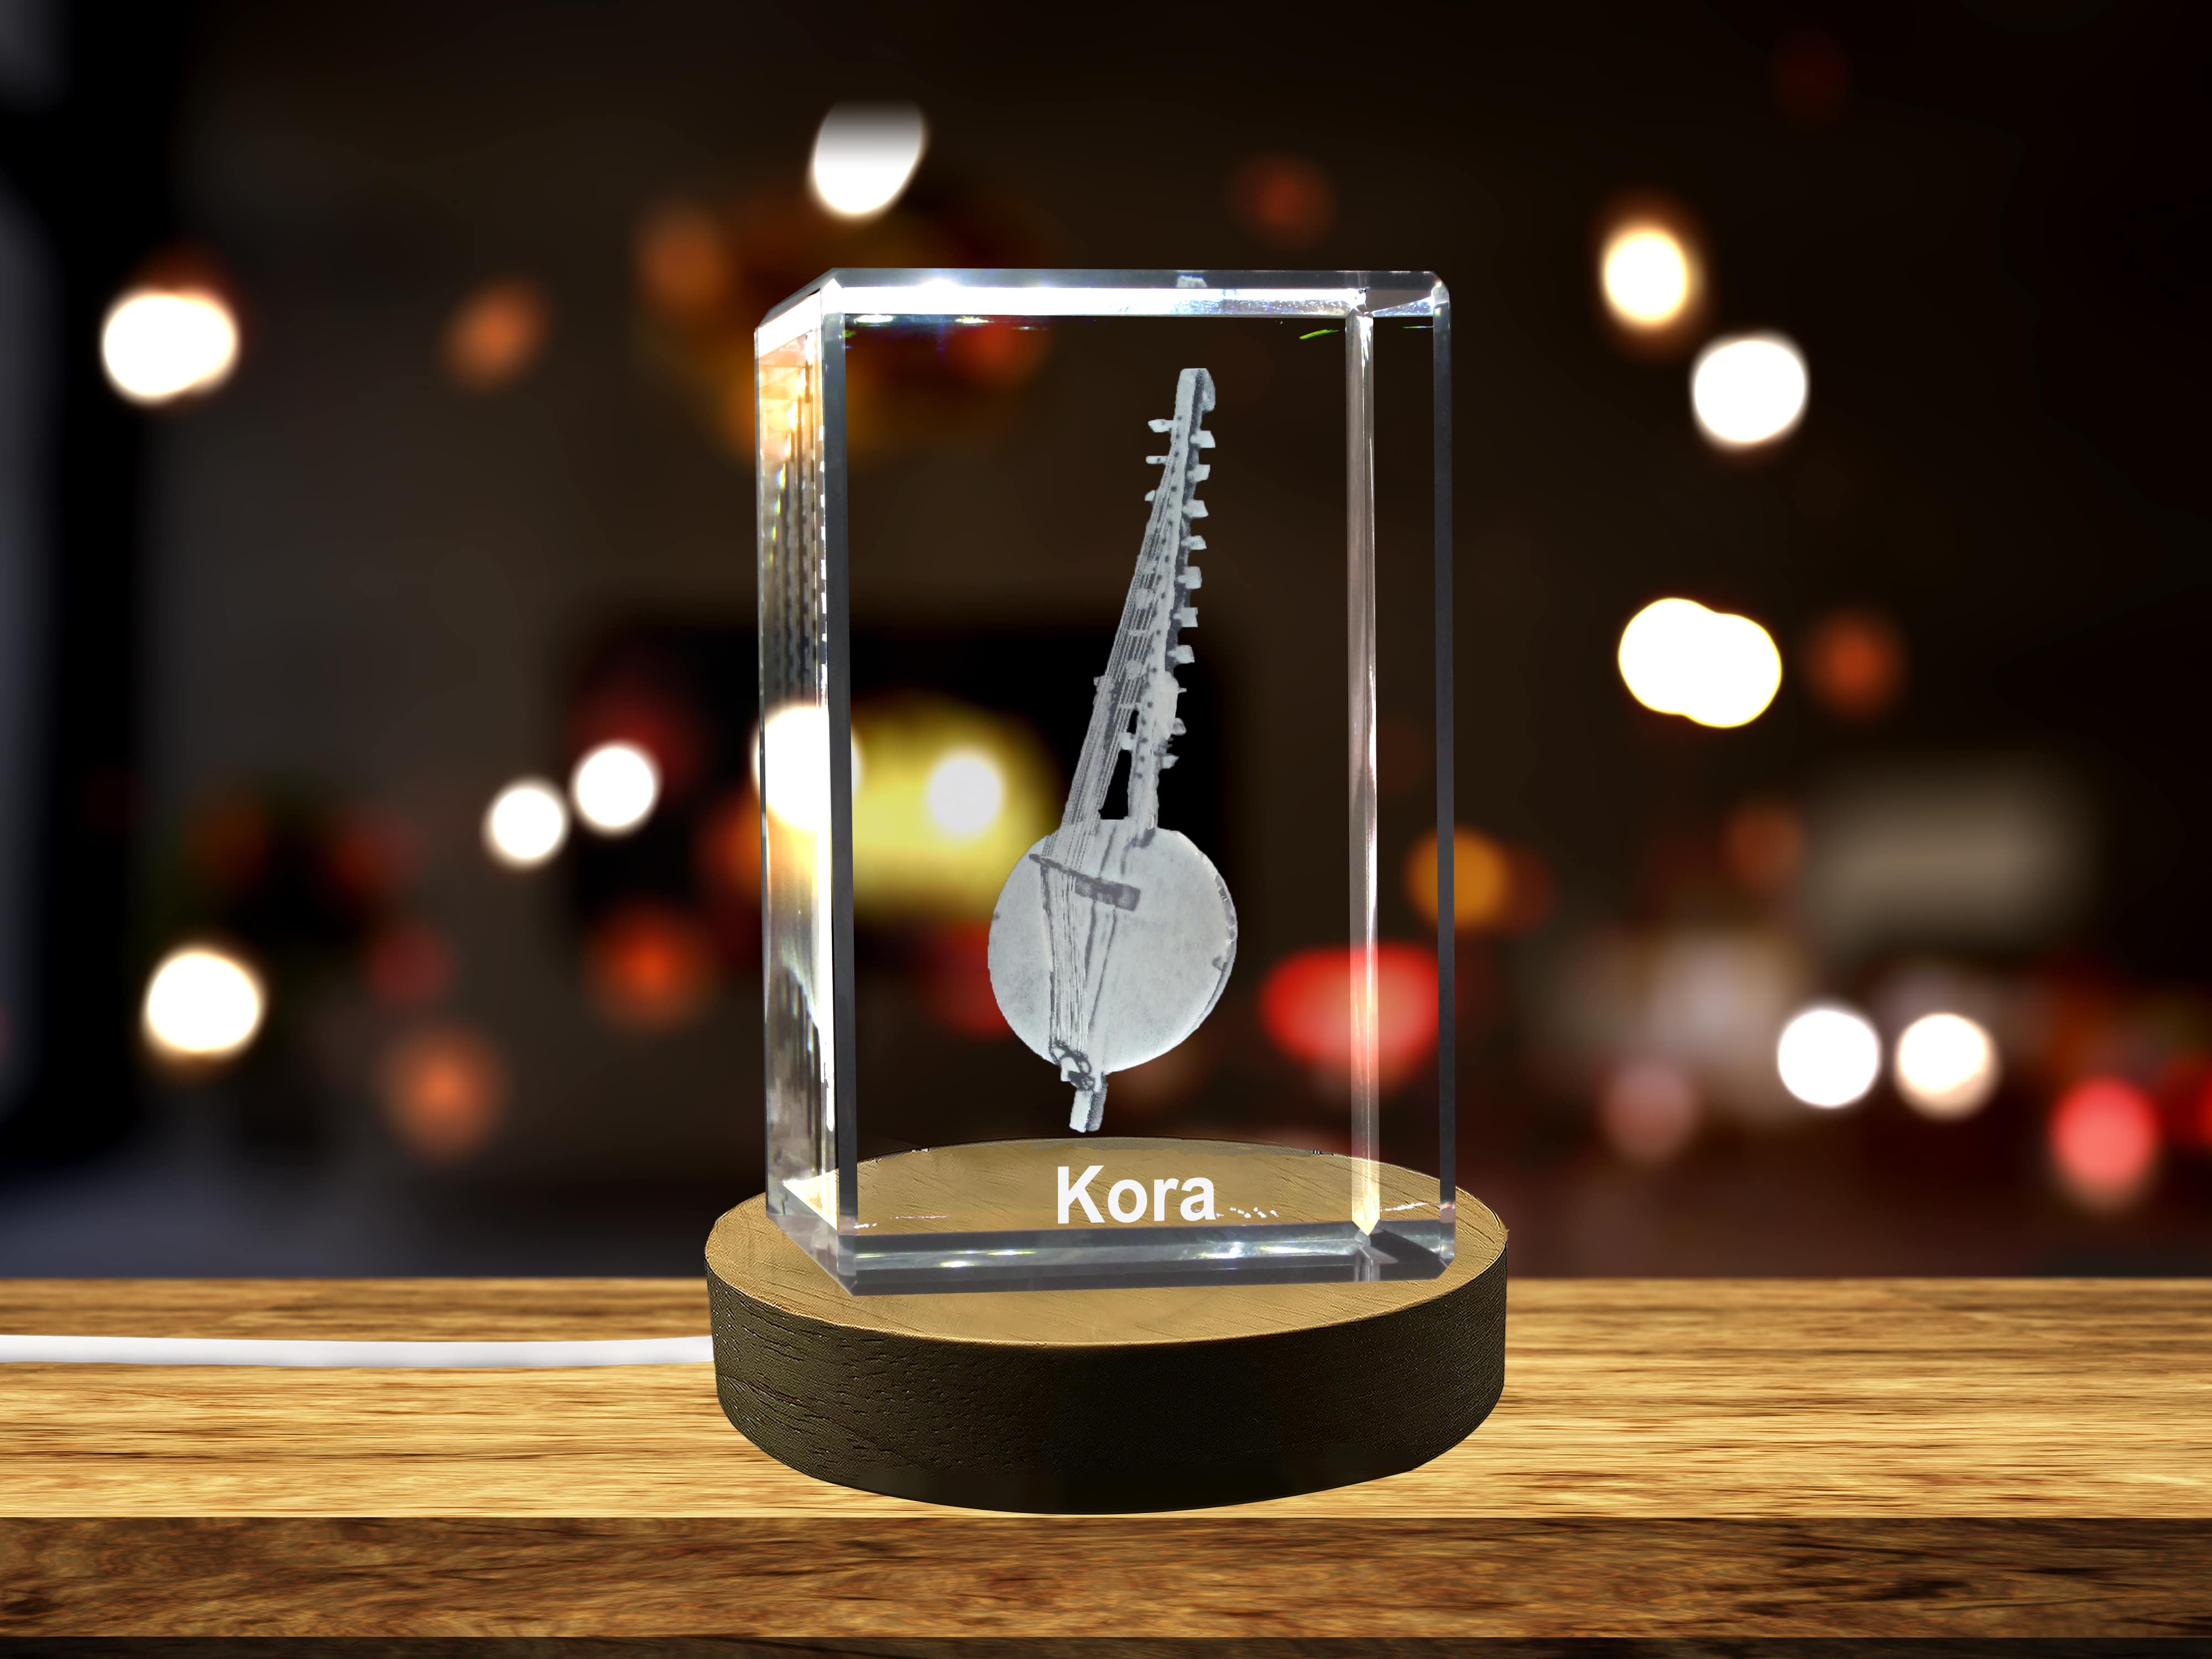 Kora 3D Engraved Crystal | Music 3D Engraved Crystal Keepsake A&B Crystal Collection